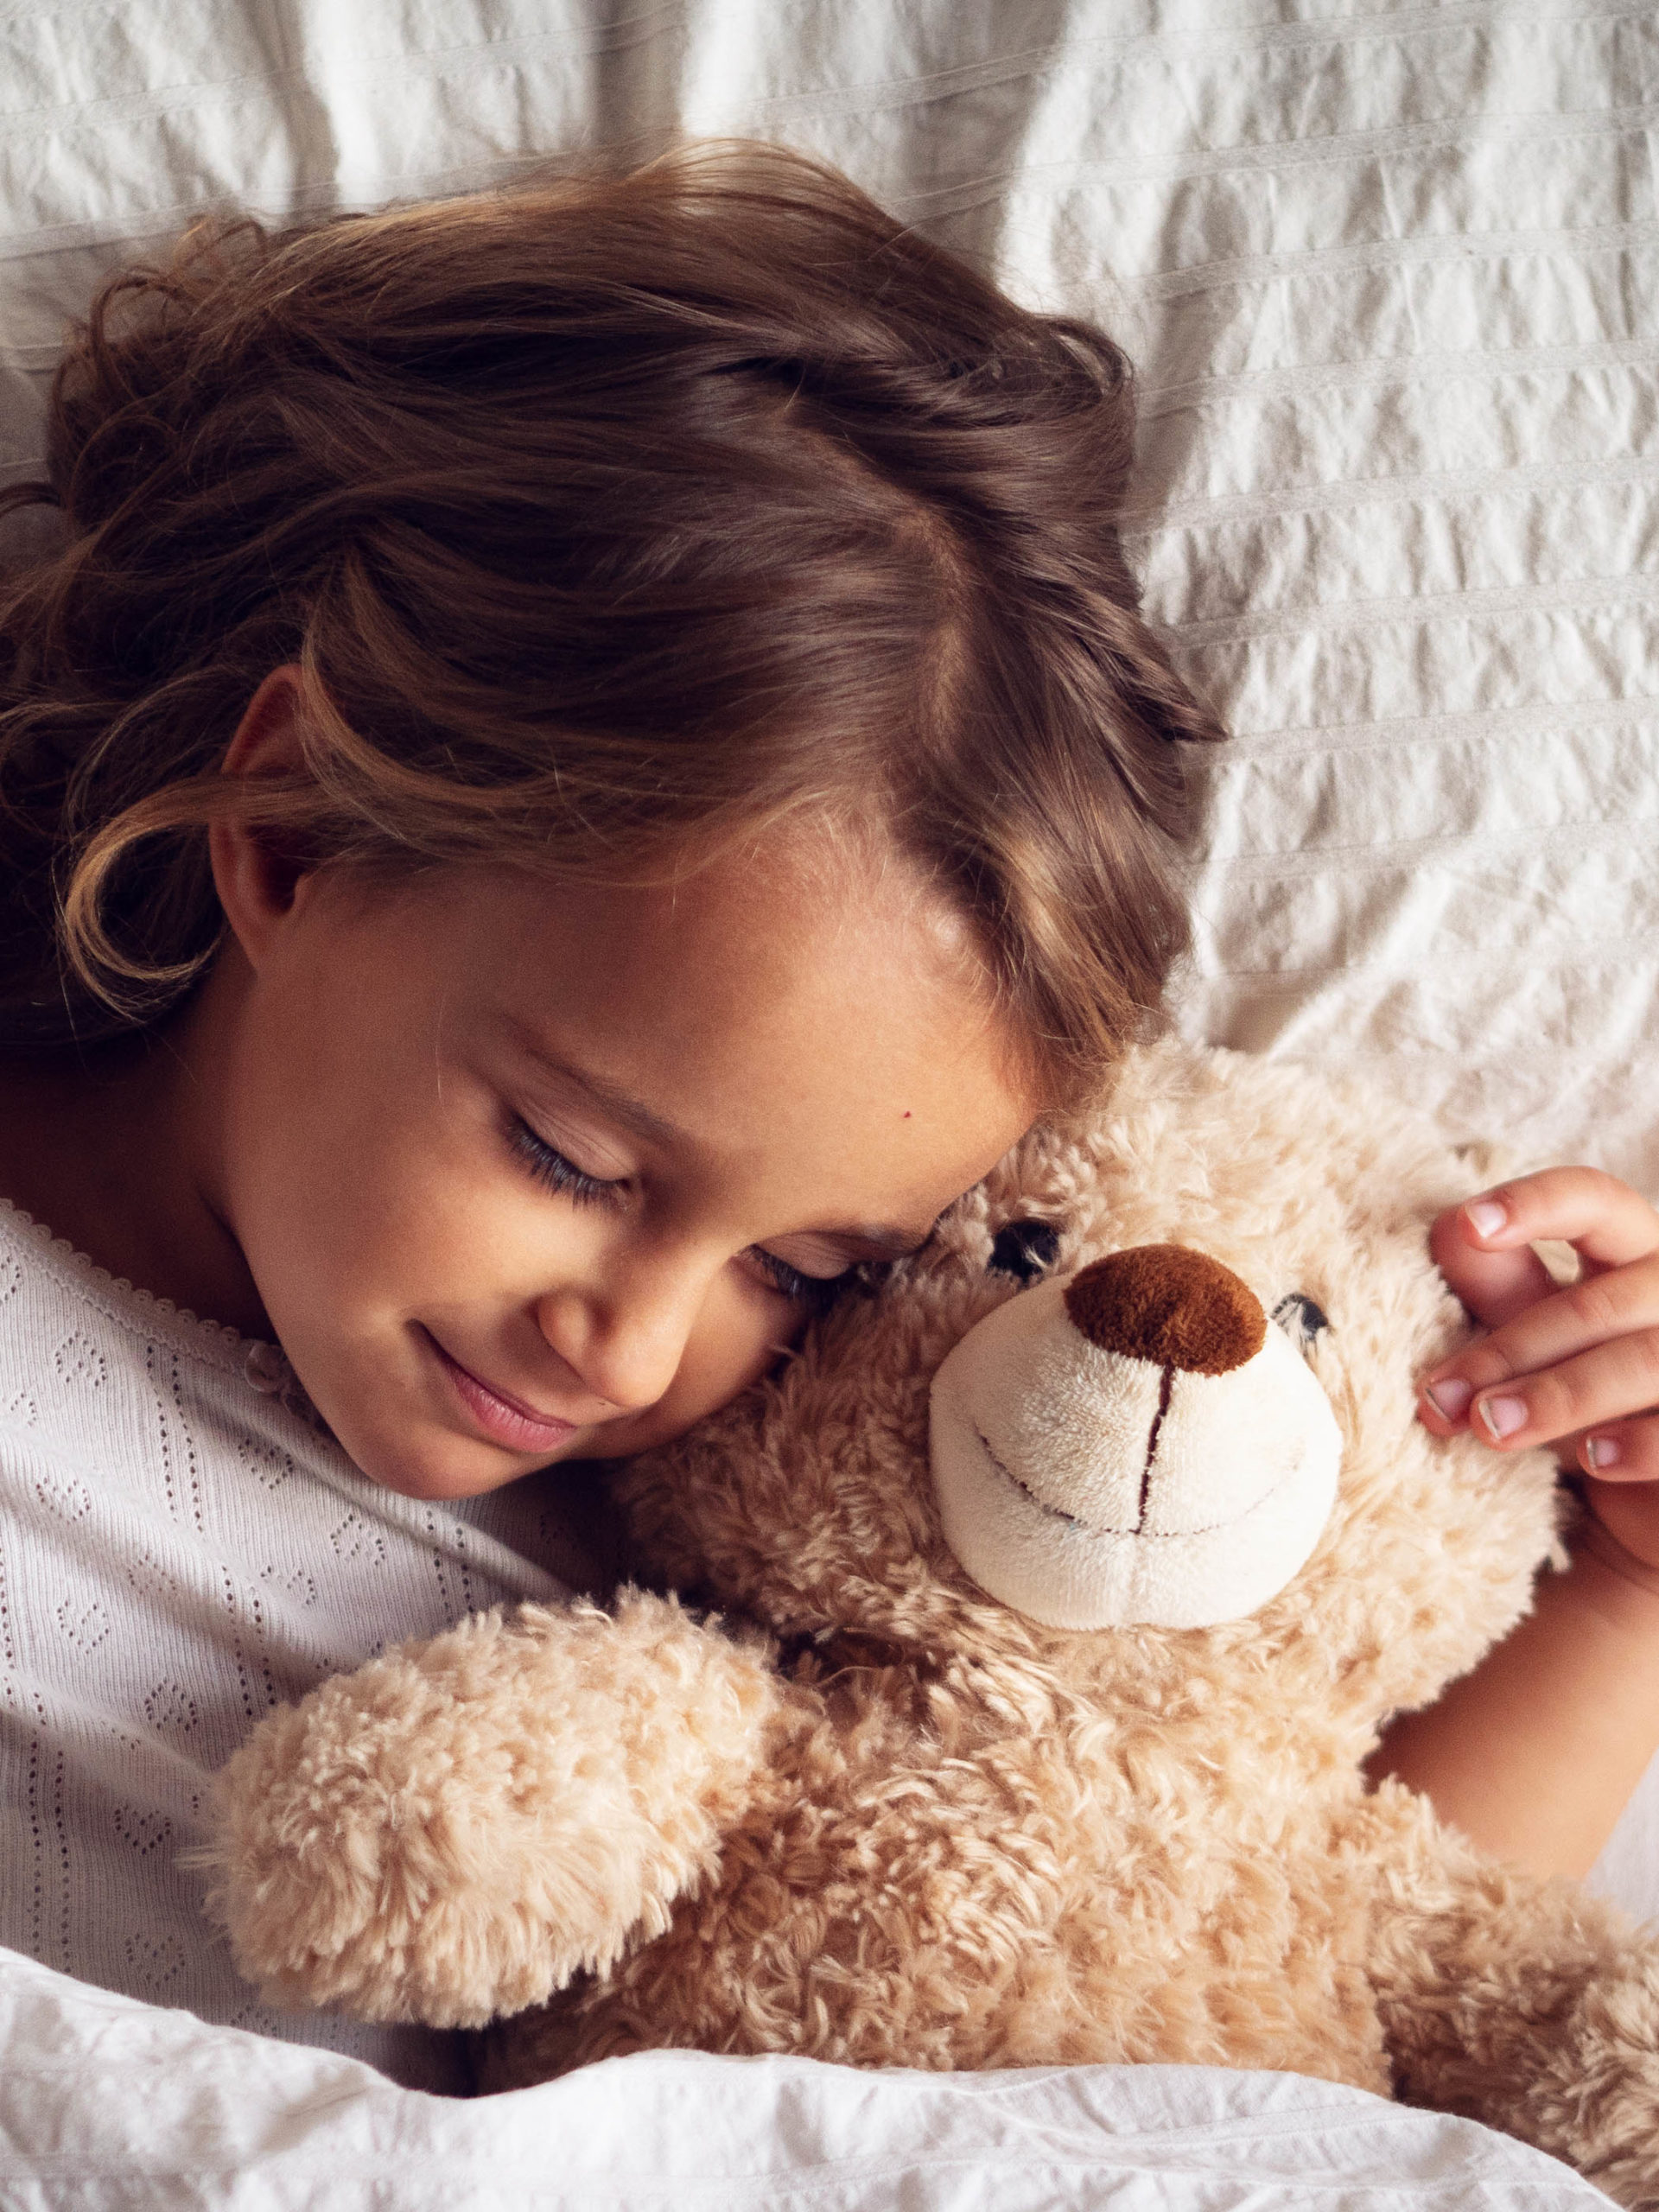 A girl sleeps in bed hugging her teddy bear